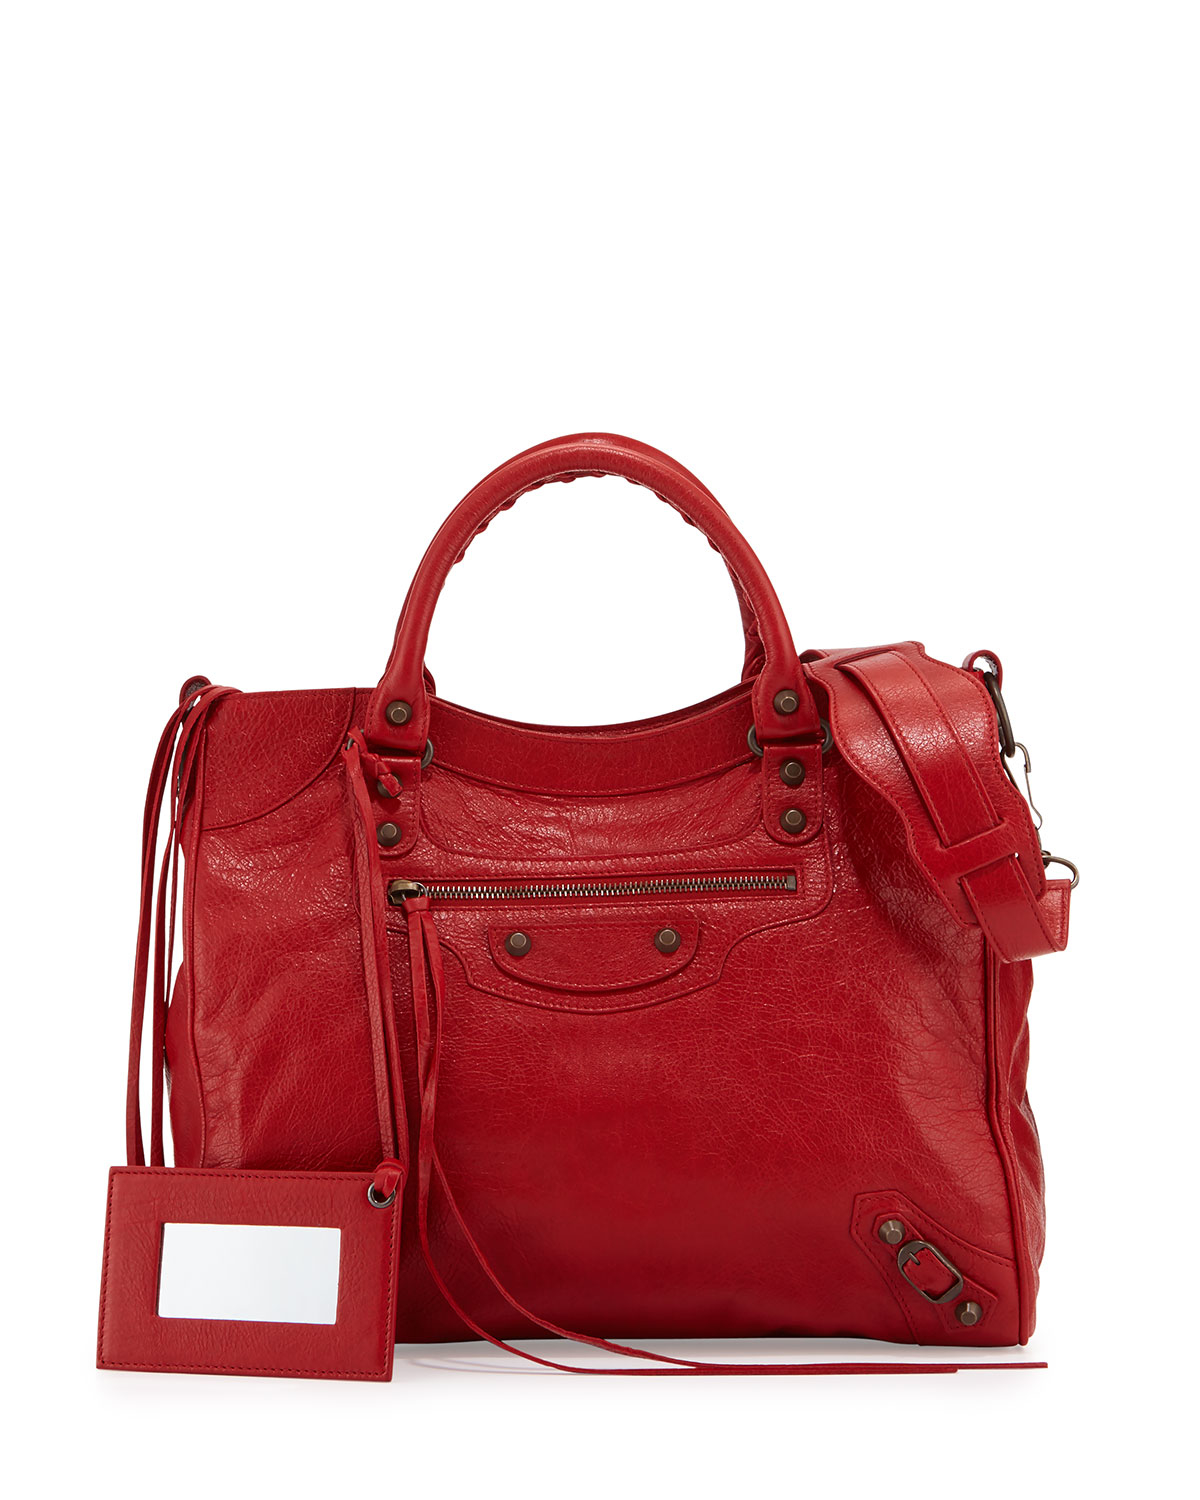 Lyst - Balenciaga Classic Velo Crossbody Bag in Red